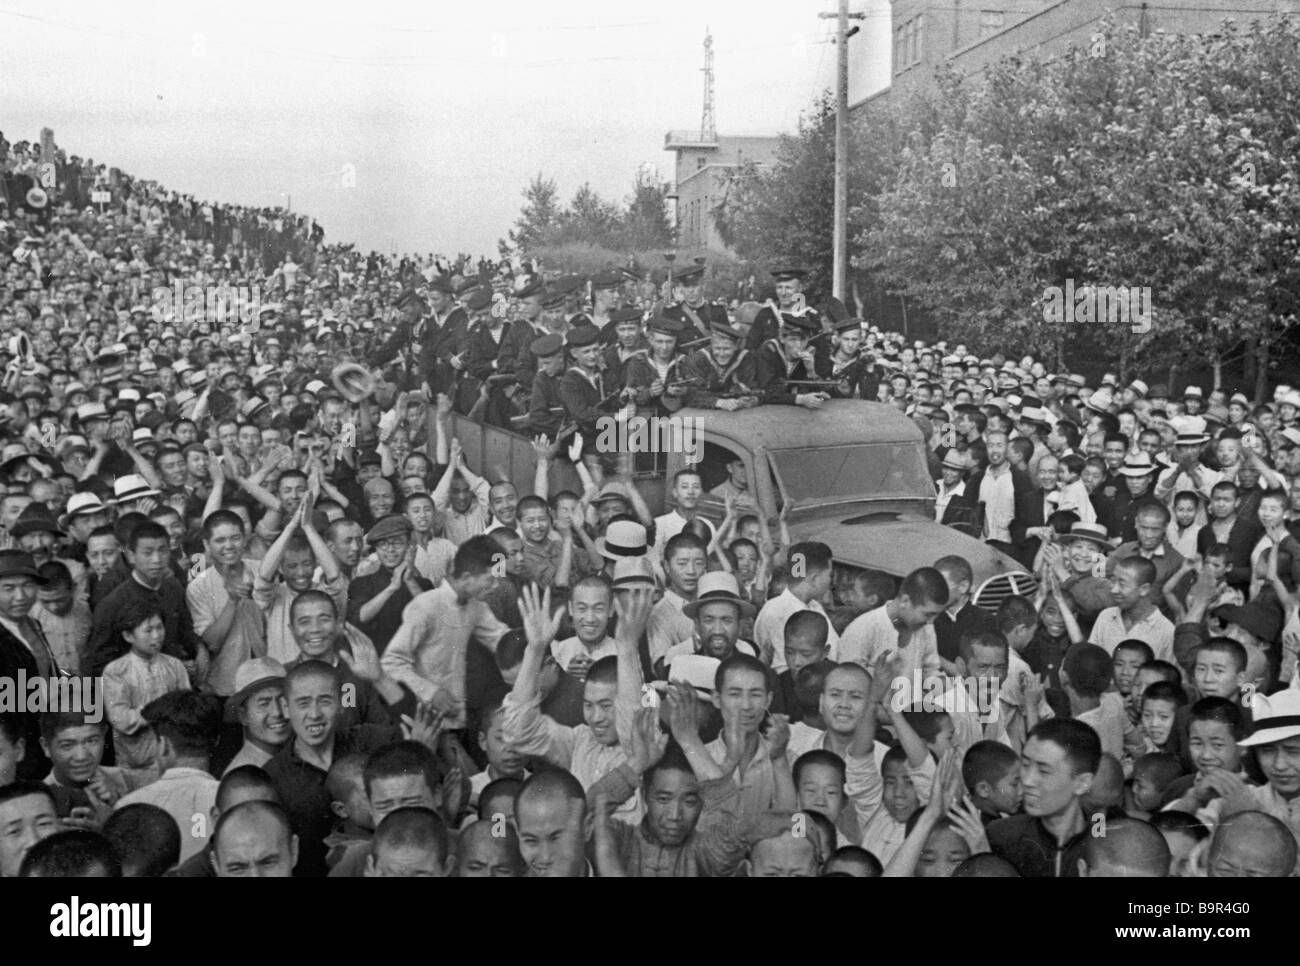 16 сентября принимал парад в харбине. Харбин 1945. Парад в Харбине 1945г. Харбин парад Победы 1945. Парад белой армии Харбин 1945.